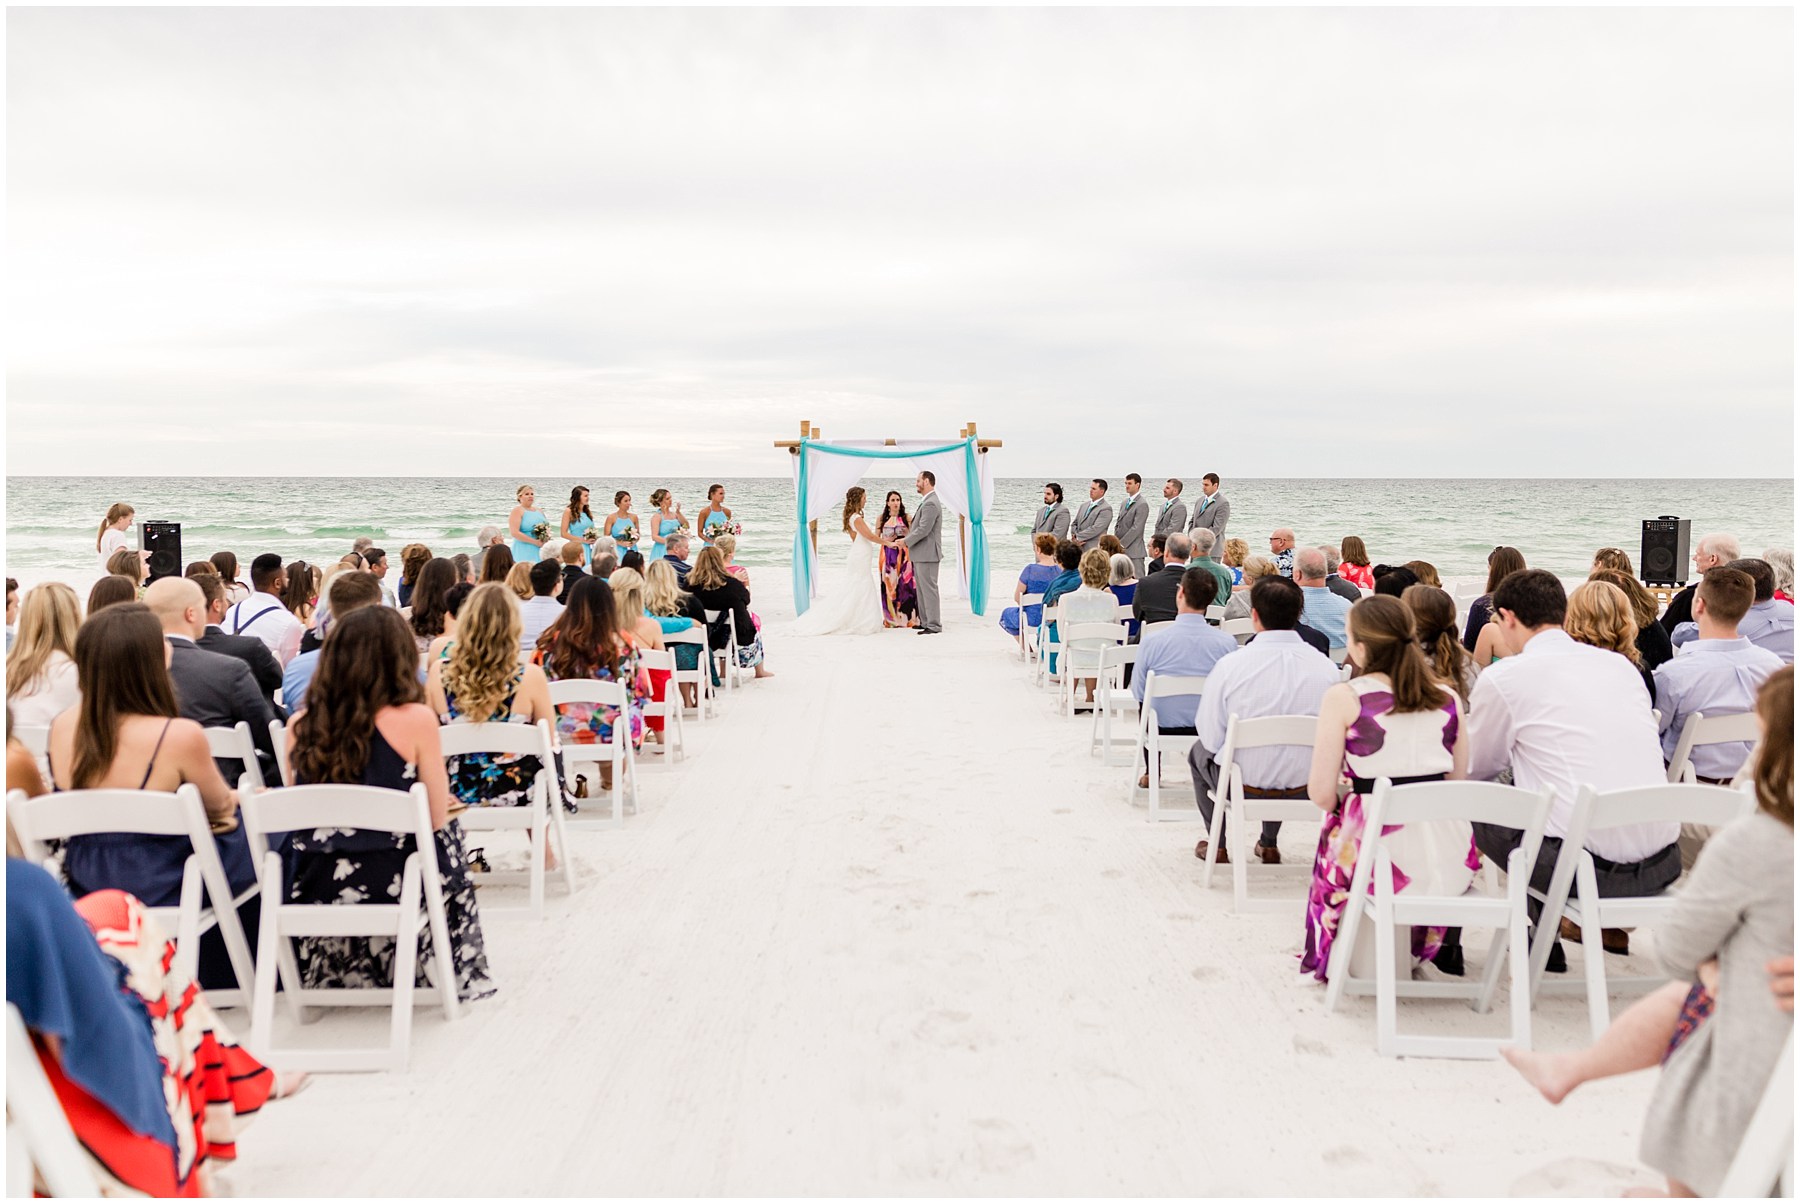 Wedding Ceremony on the beach in Destin, FL